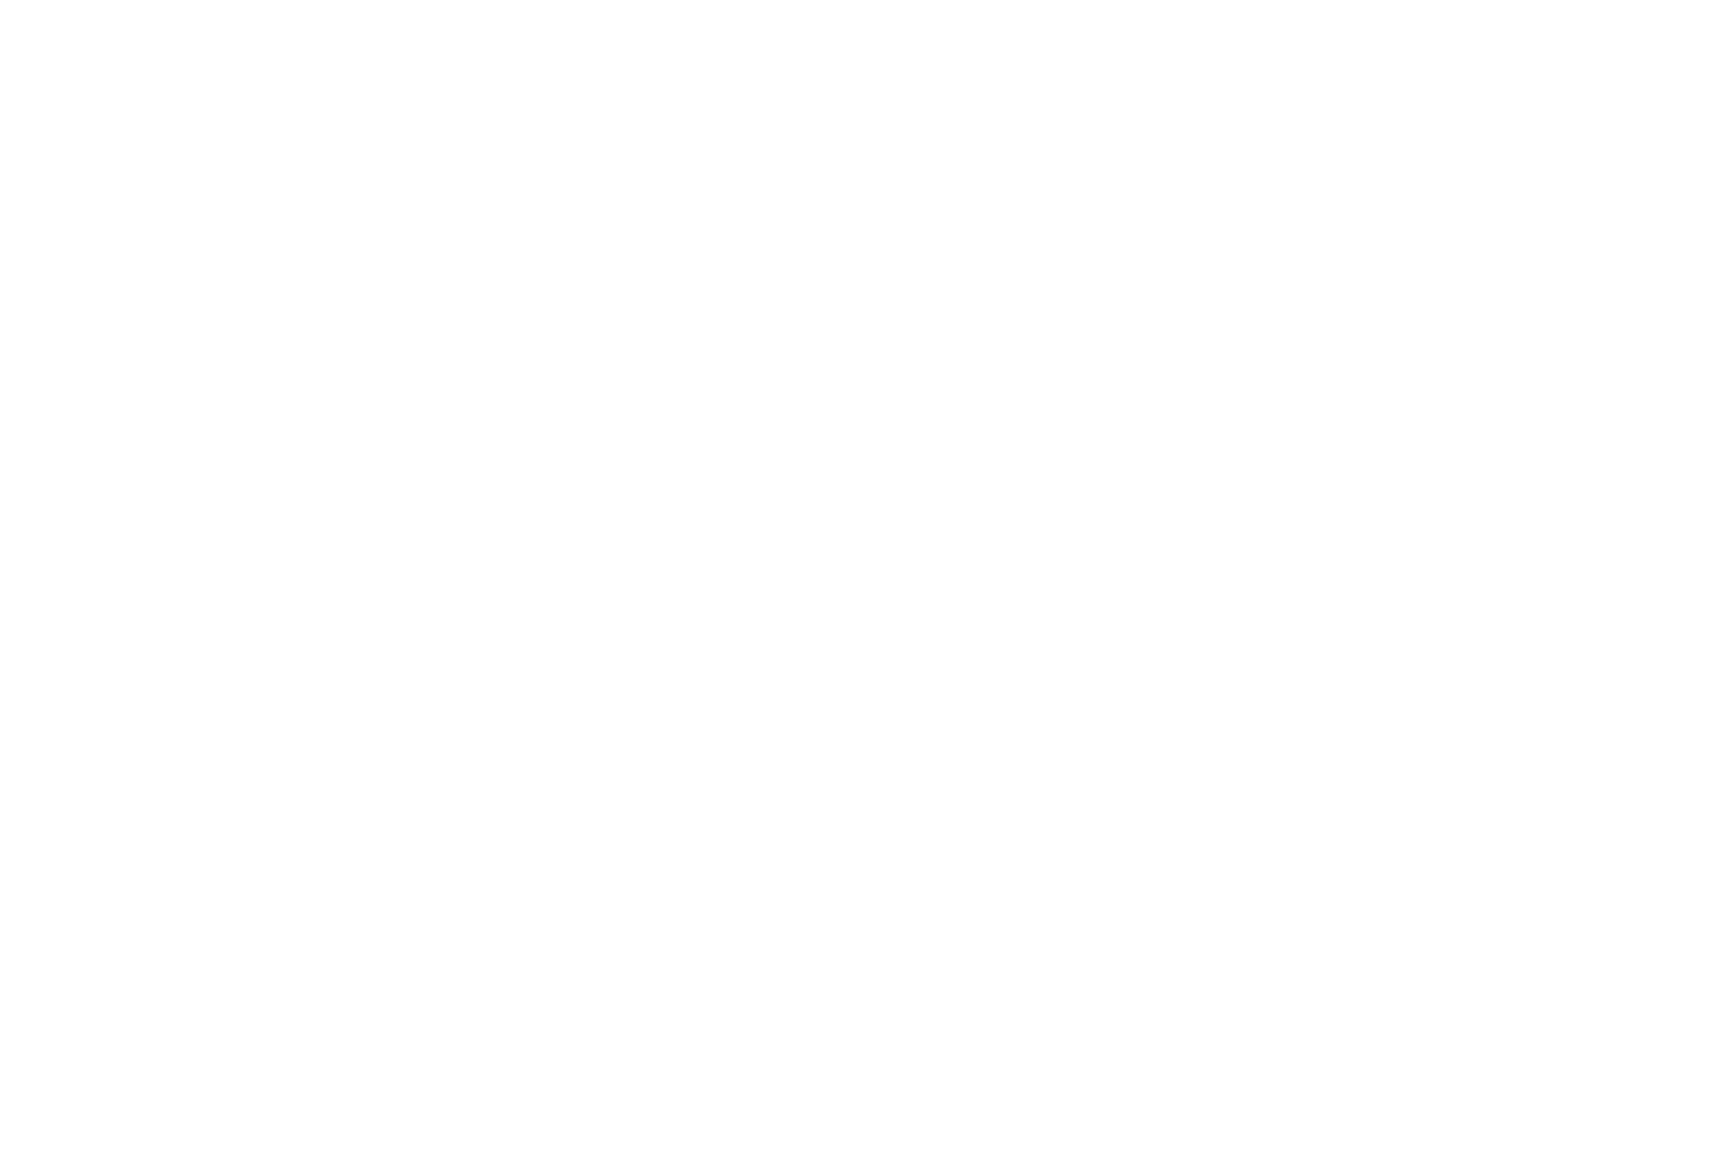 AWARD WINNER - Indie Short Fest - One-Night 2020.png